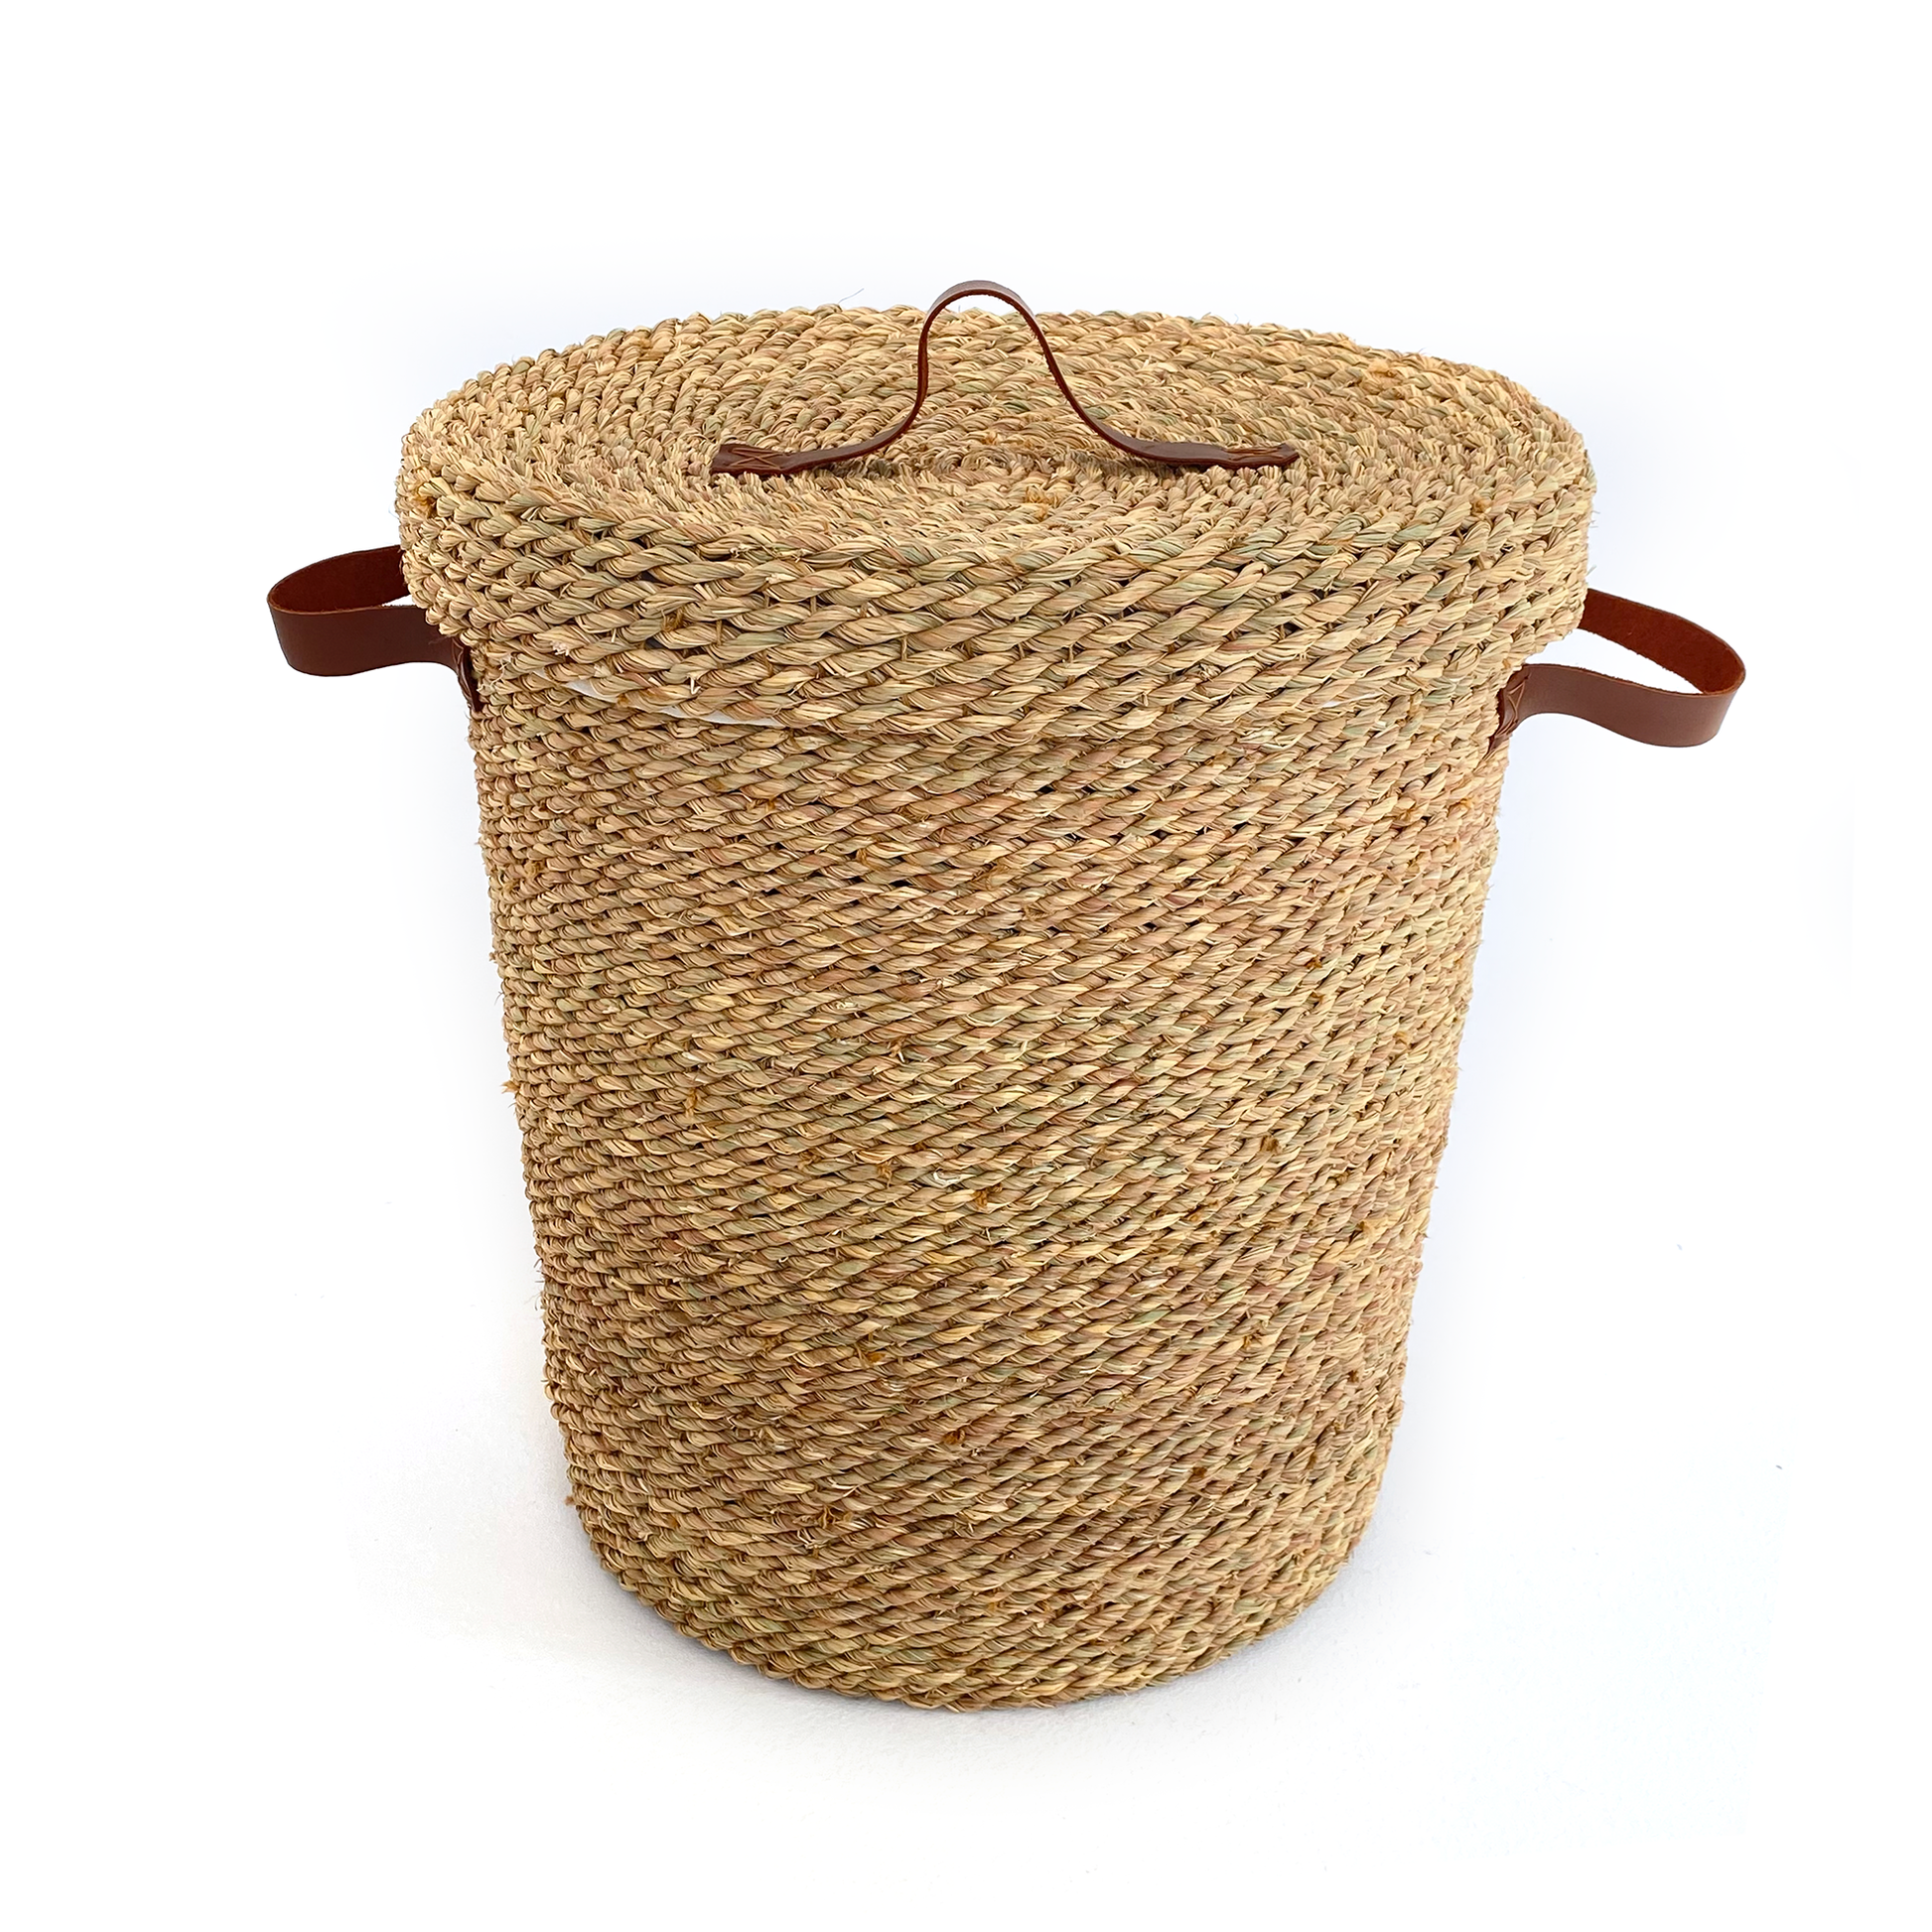 Halfa laundry basket with lid and leather handle. سلة حلفا للغسيل بغطاء و بيد جلد